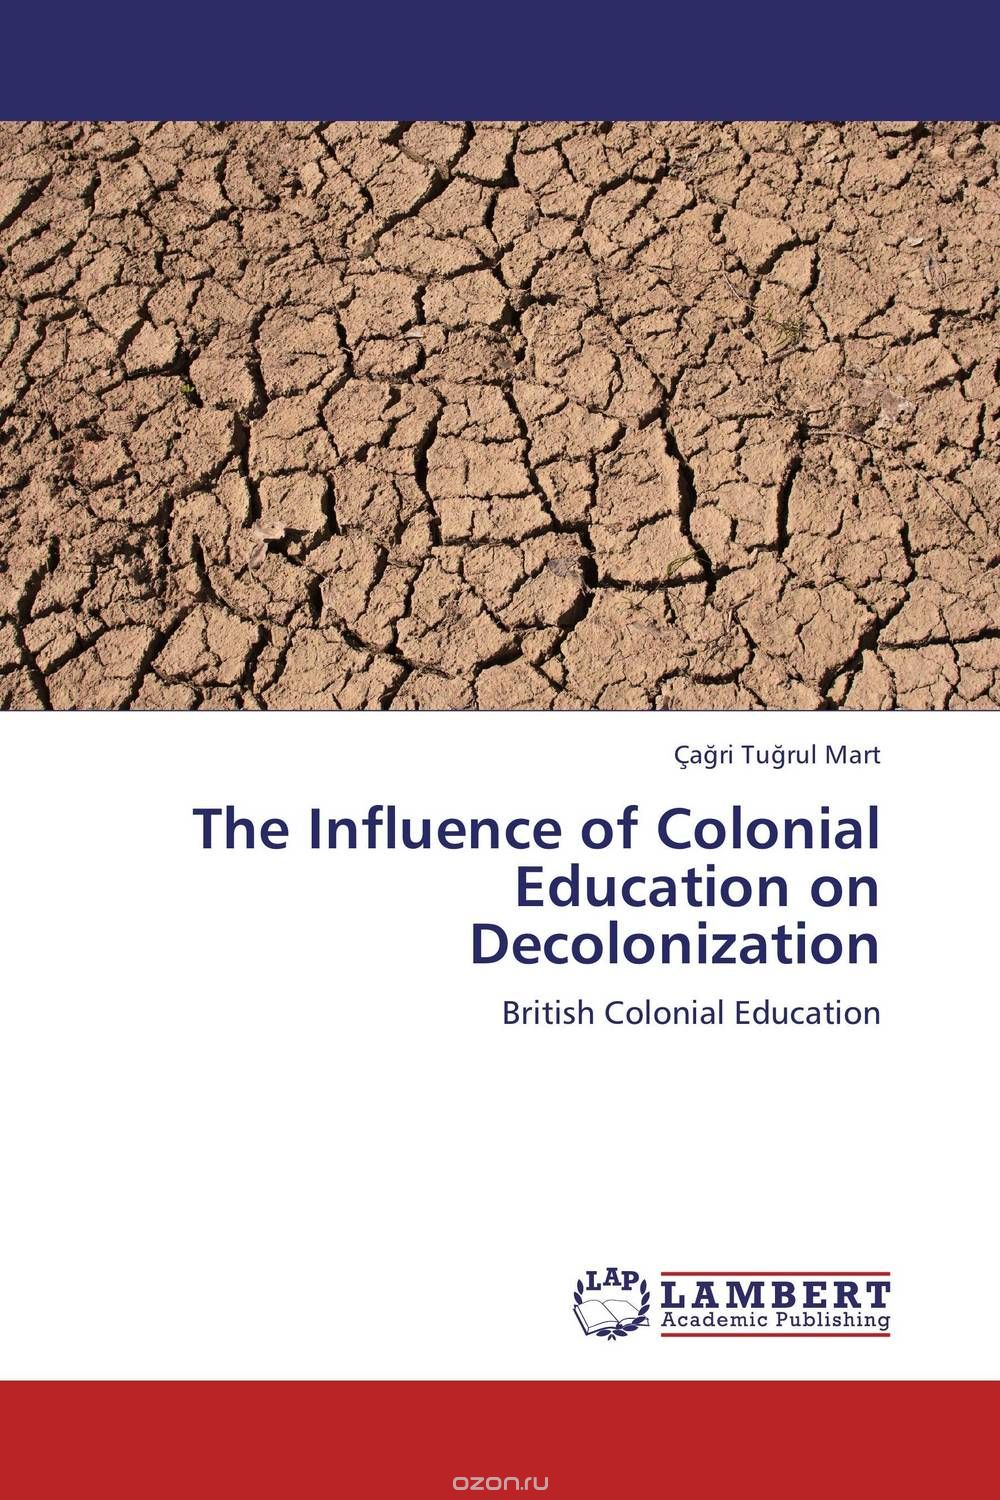 Скачать книгу "The Influence of Colonial Education on Decolonization"